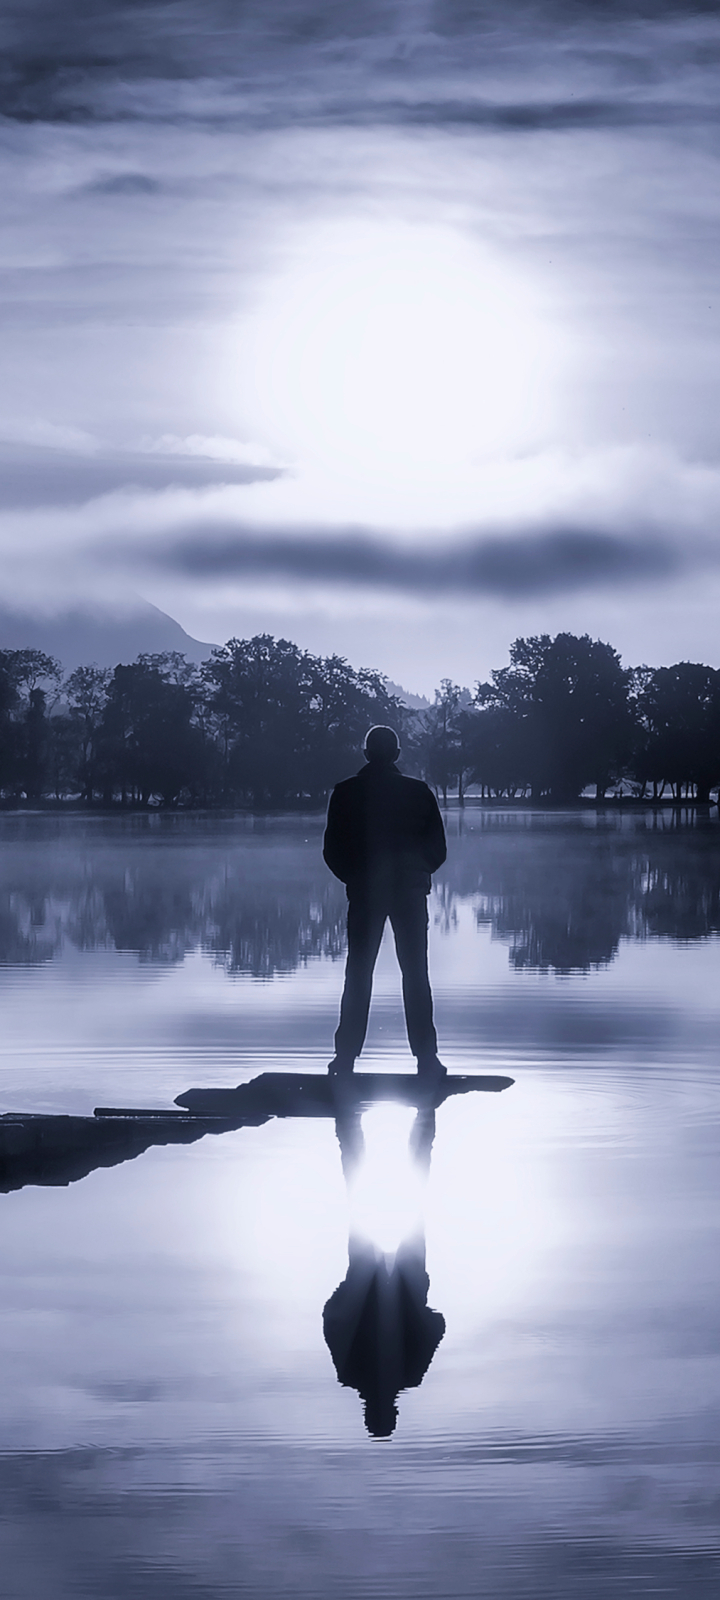 Alone at Lake by John McSporran